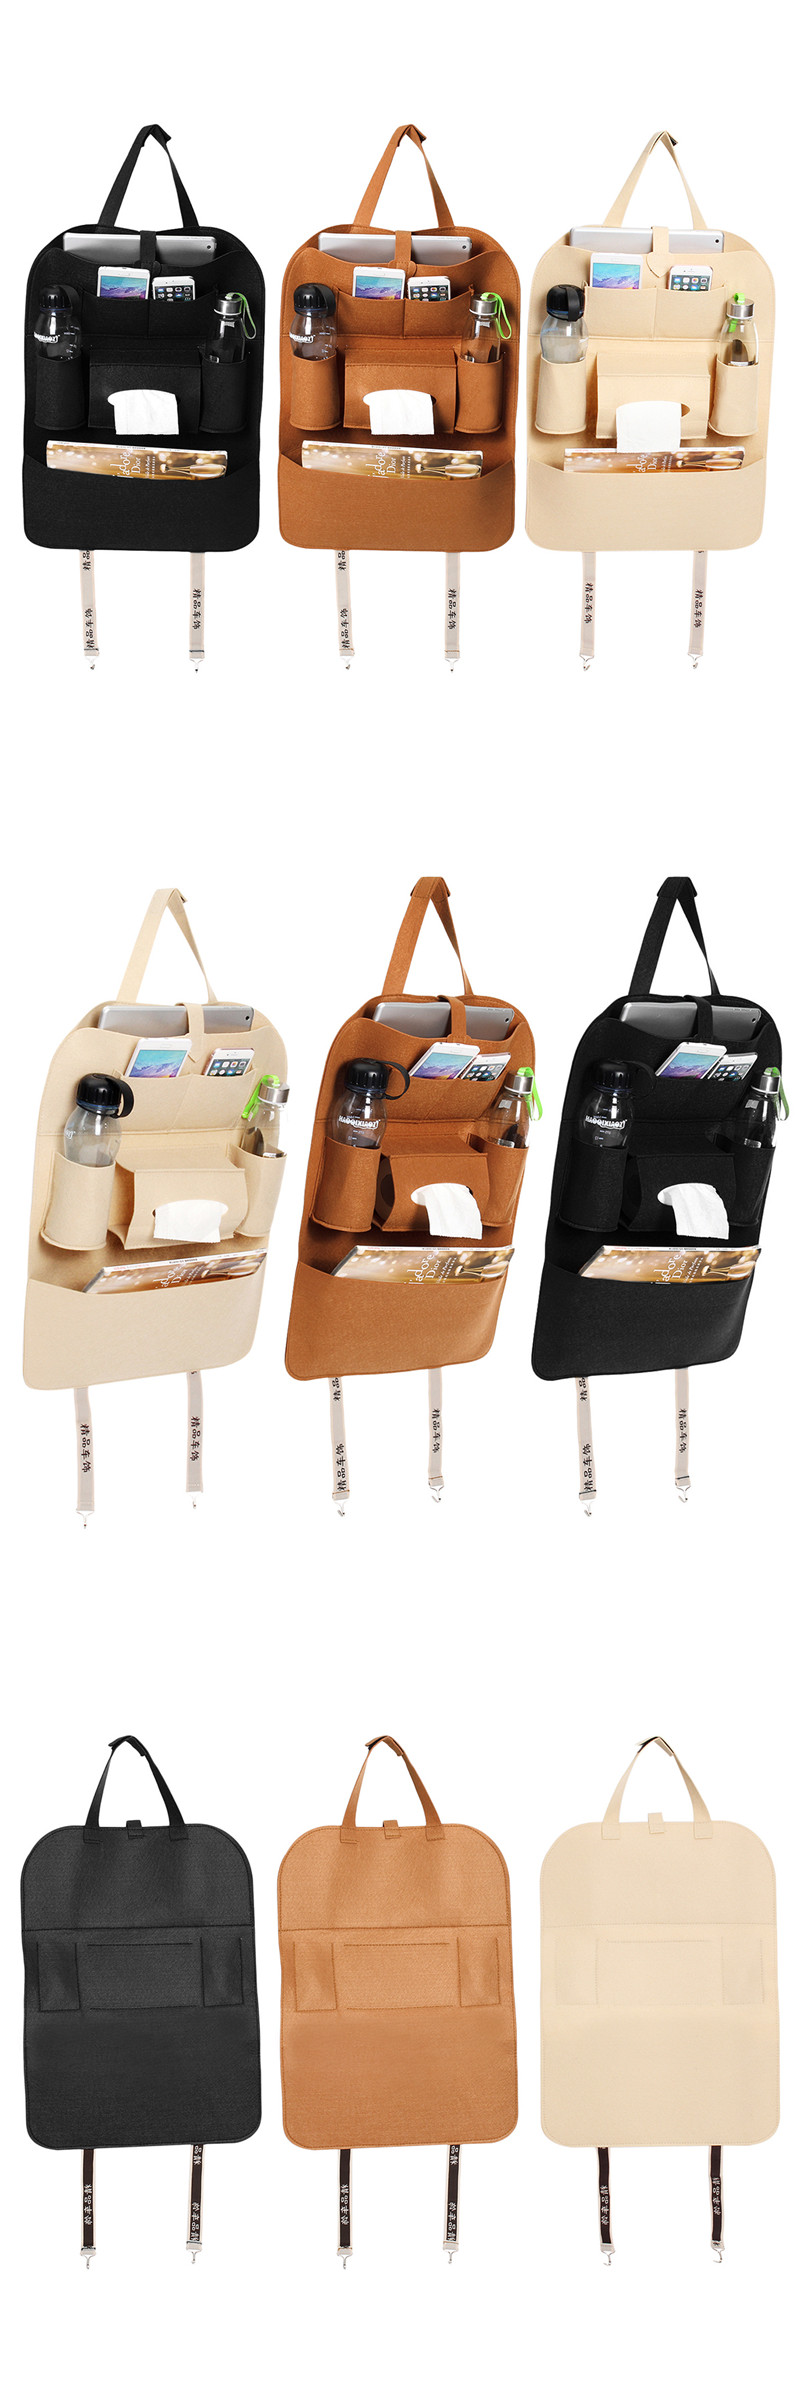 IPReereg-Peach-Style-Auto-Car-Seat-Back-Multi-Pocket-Storage-Bag-Organizer-Holder-Accessory-56x40cm-1199667-1